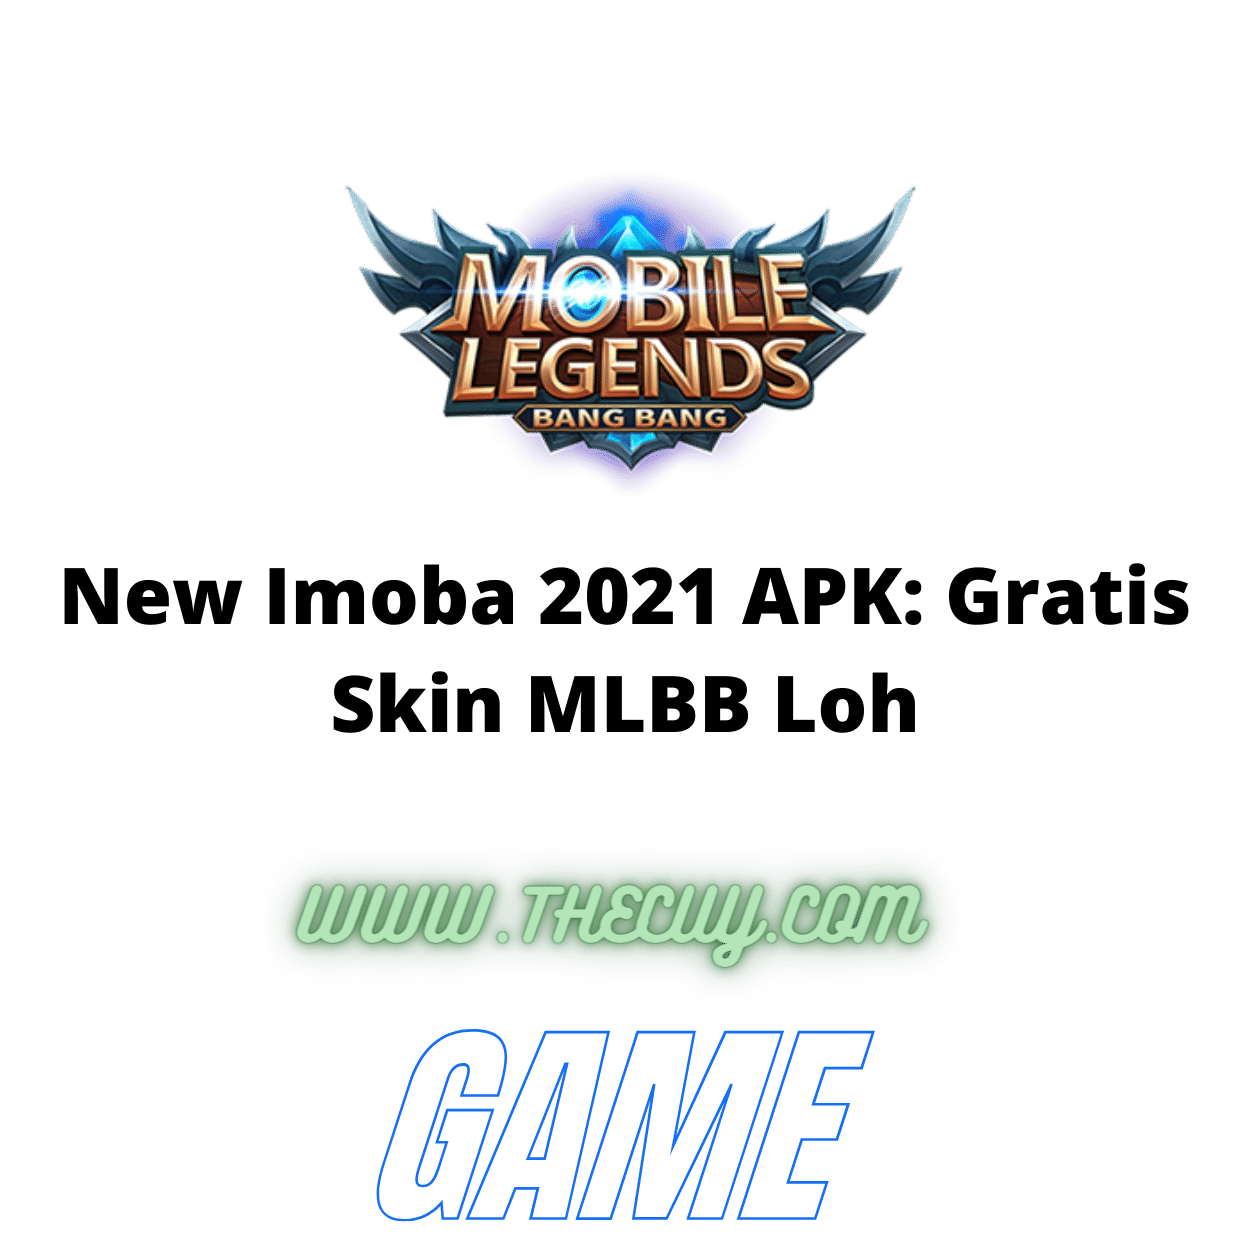 New Imoba 2021 APK: Gratis Skin MLBB Loh